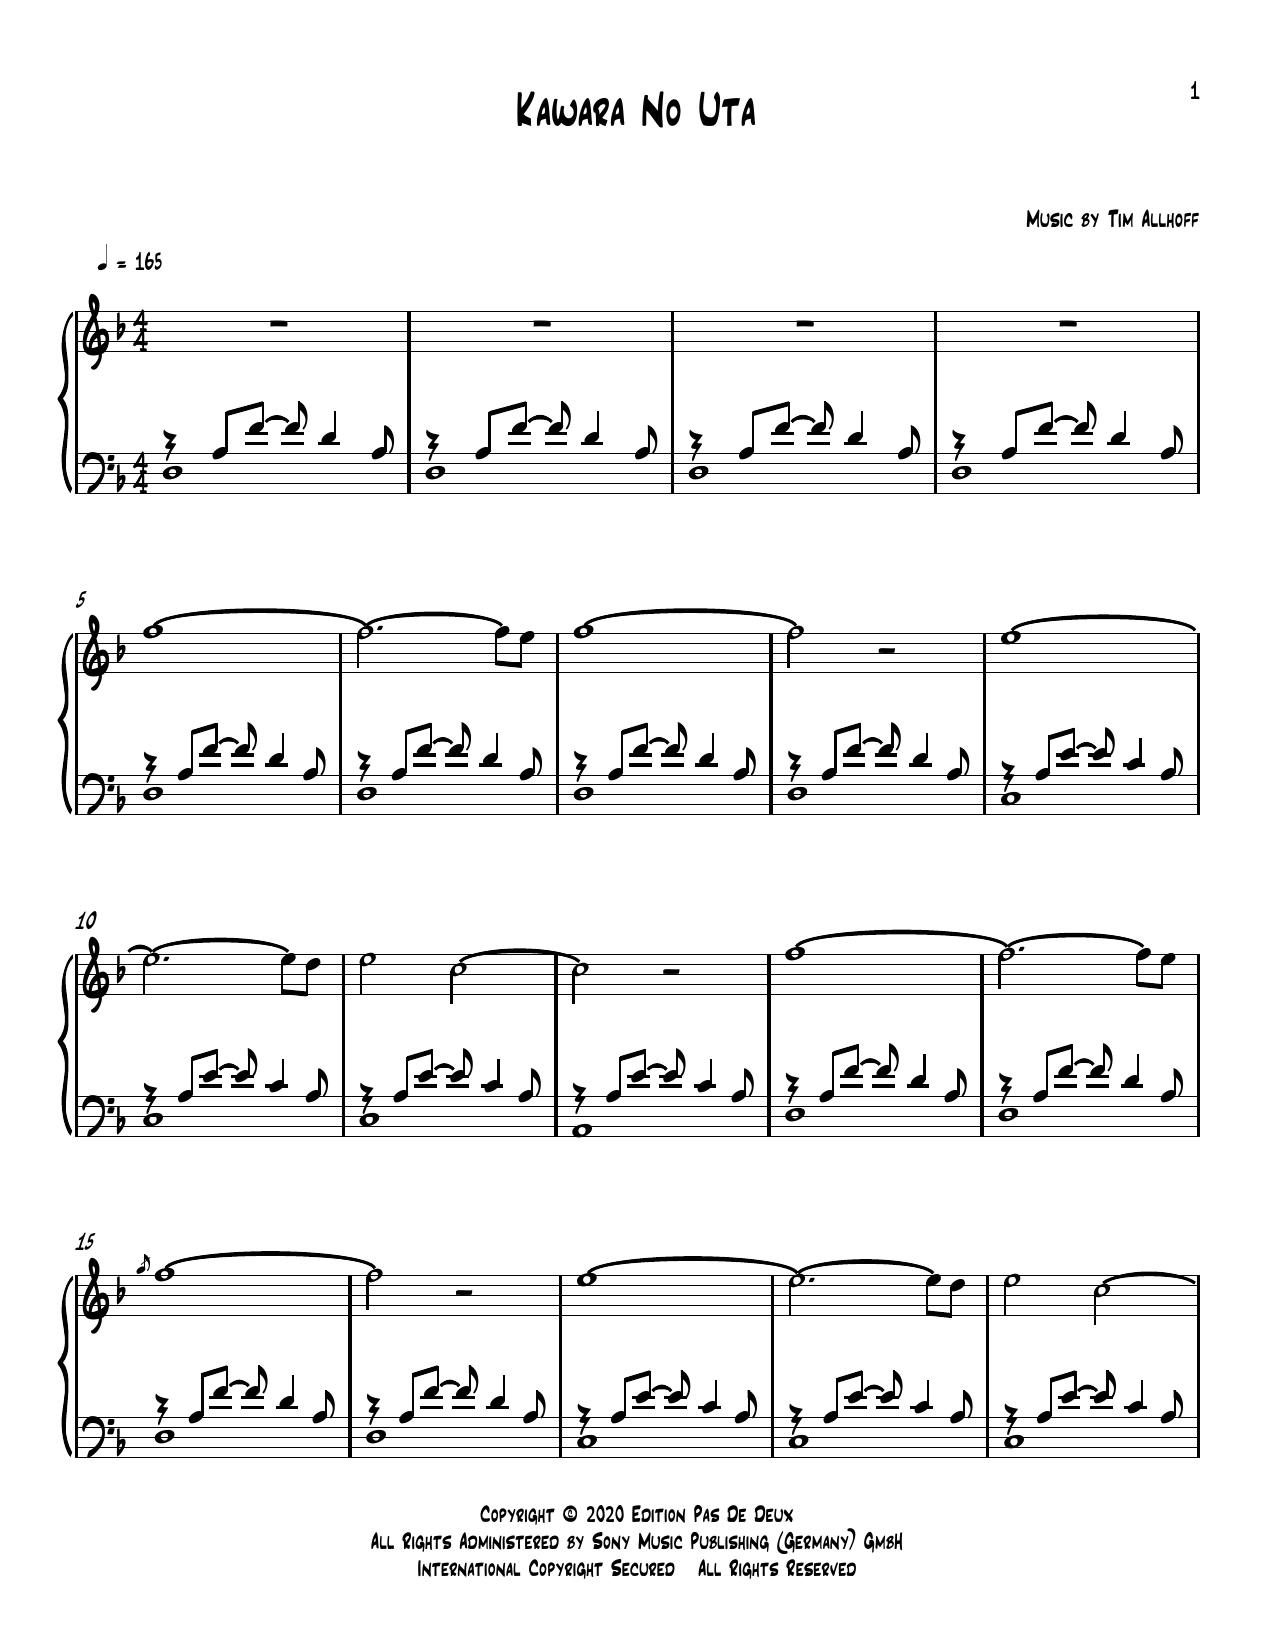 Tim Allhoff Kawara No Uta Sheet Music Notes & Chords for Piano Solo - Download or Print PDF